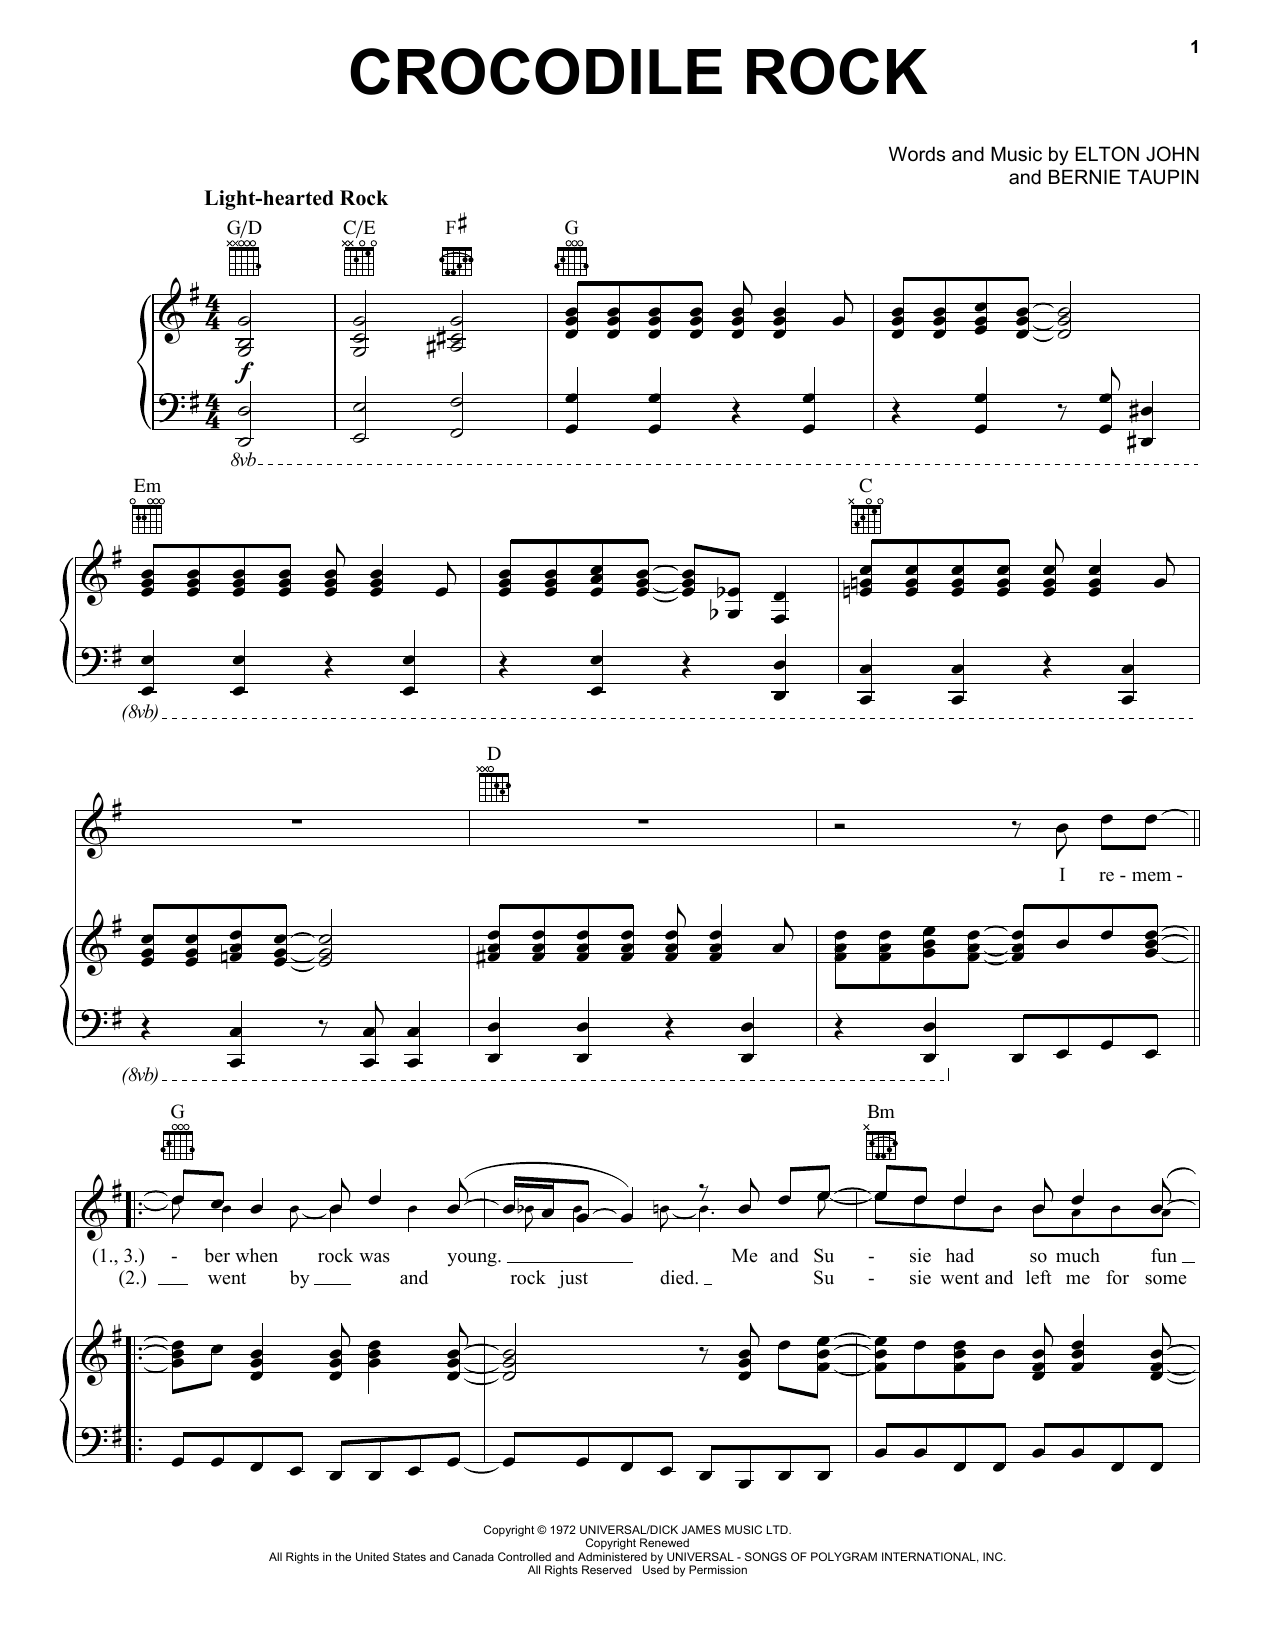 Elton John Crocodile Rock Sheet Music Notes & Chords for Alto Saxophone - Download or Print PDF